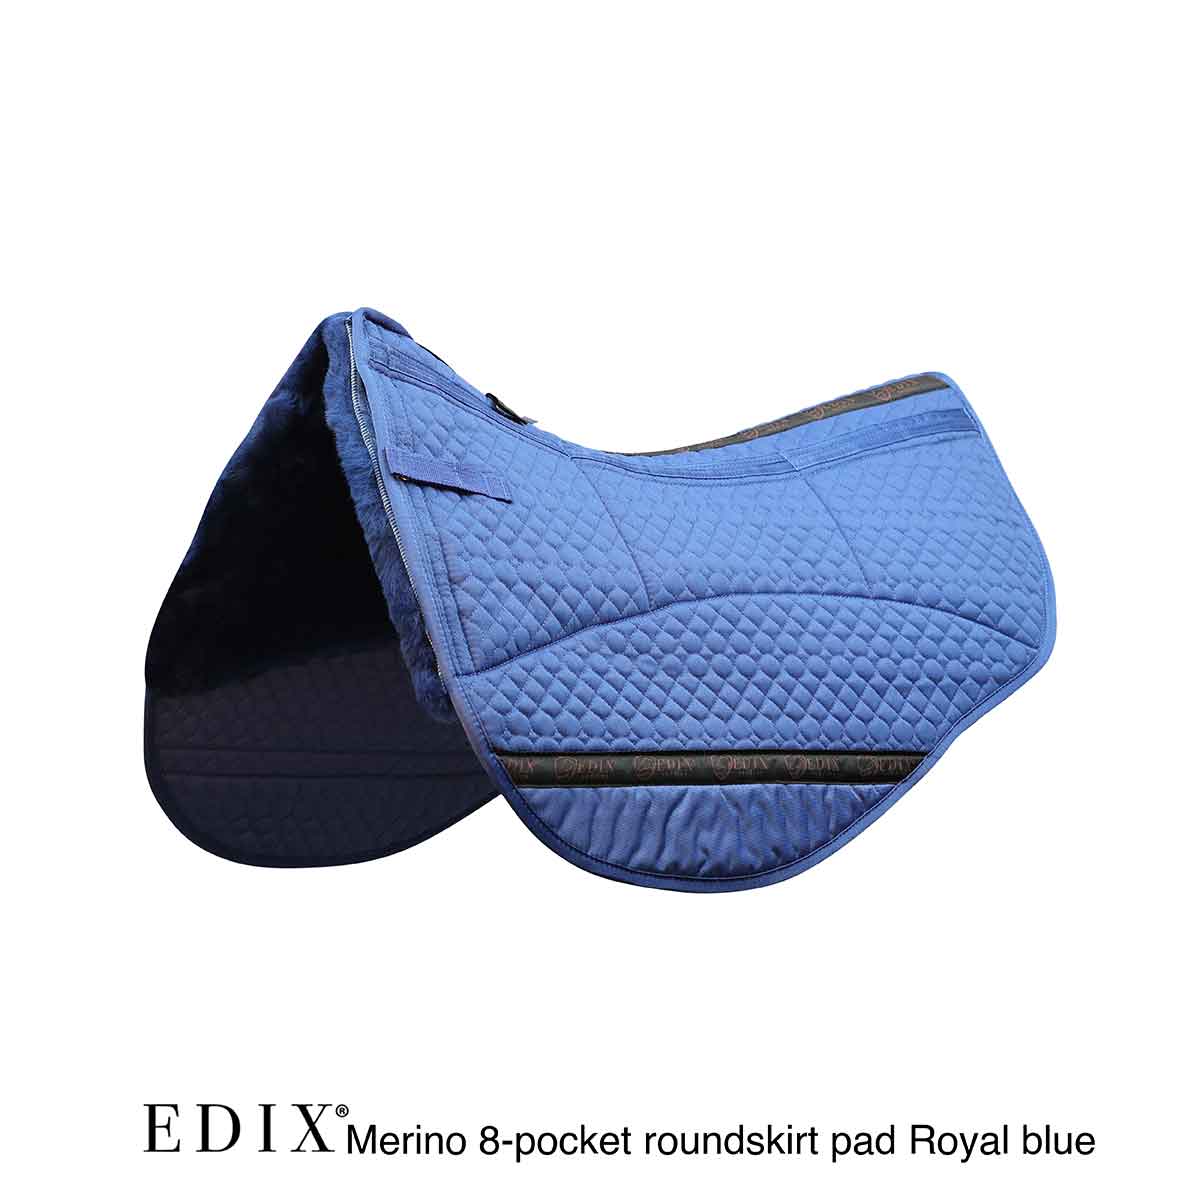 https://www.edixsaddles.com/wp-content/uploads/1.0898.4080-EDIX-merino-sheepskin-roundskirt-8-pocket-pad-royal-blue-IMG_5675.jpg